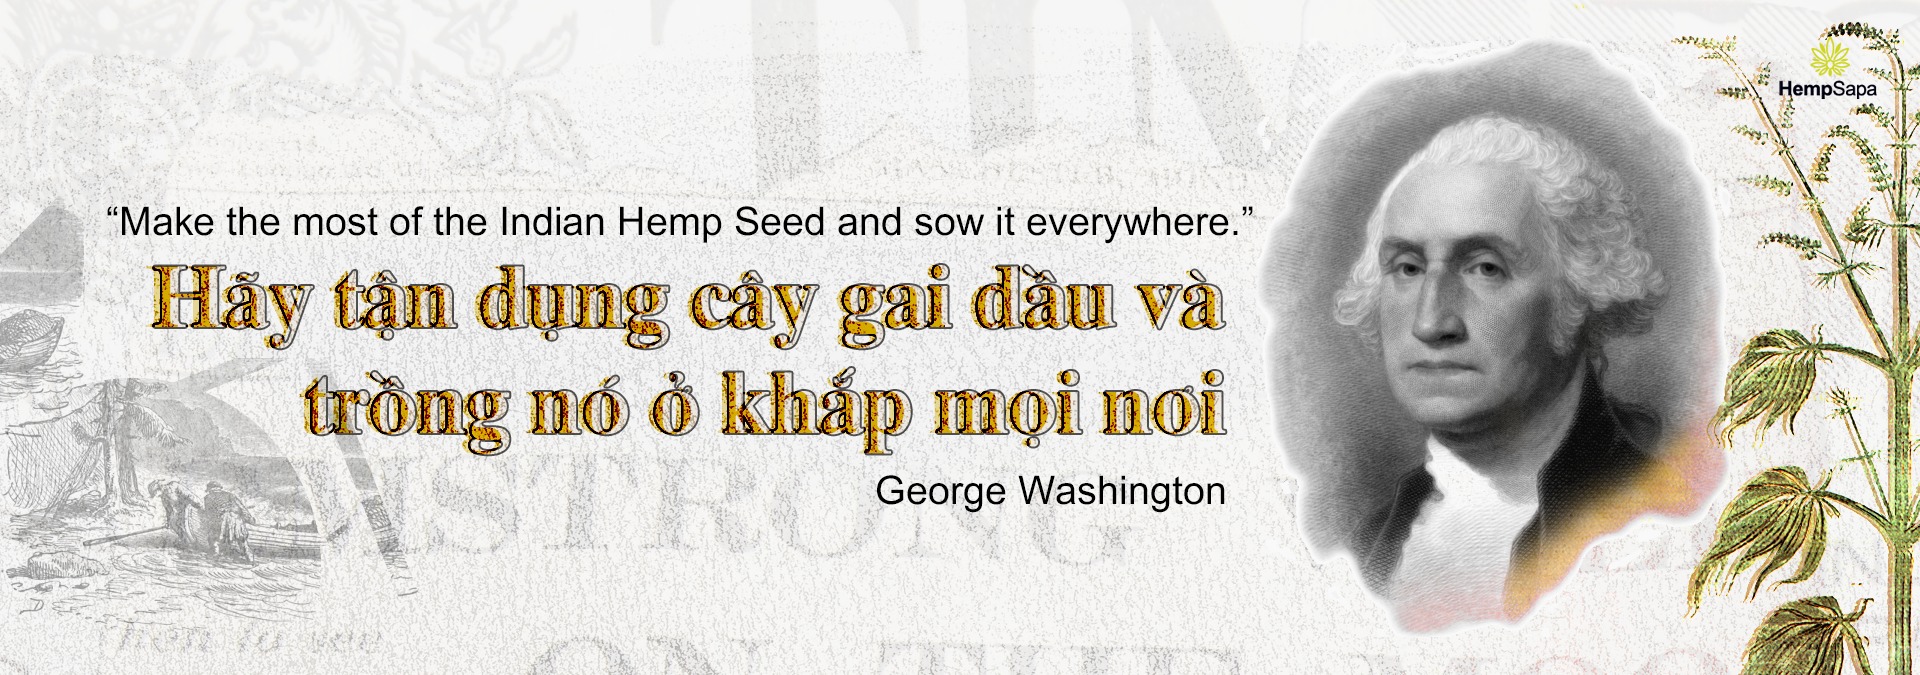 George Washington talk about Hemp